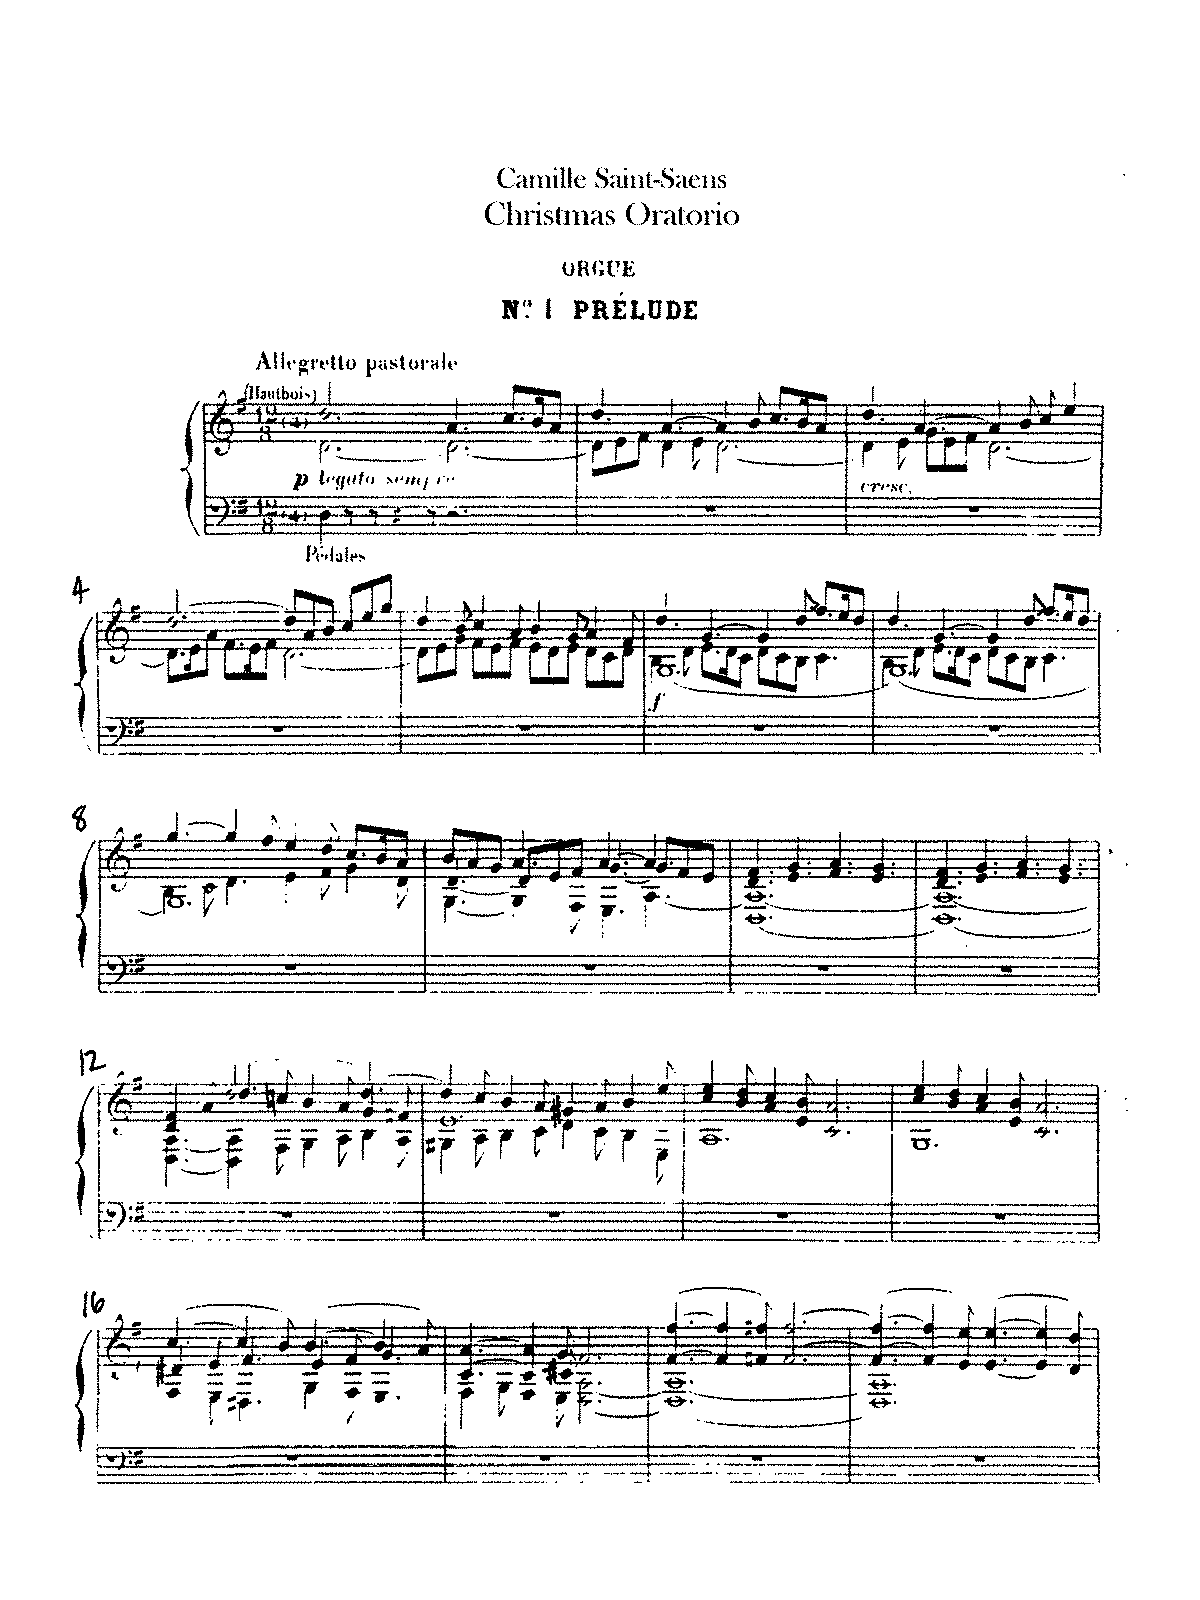 Oratorio de Noël, Op.12 (Saint-Saëns, Camille) - IMSLP